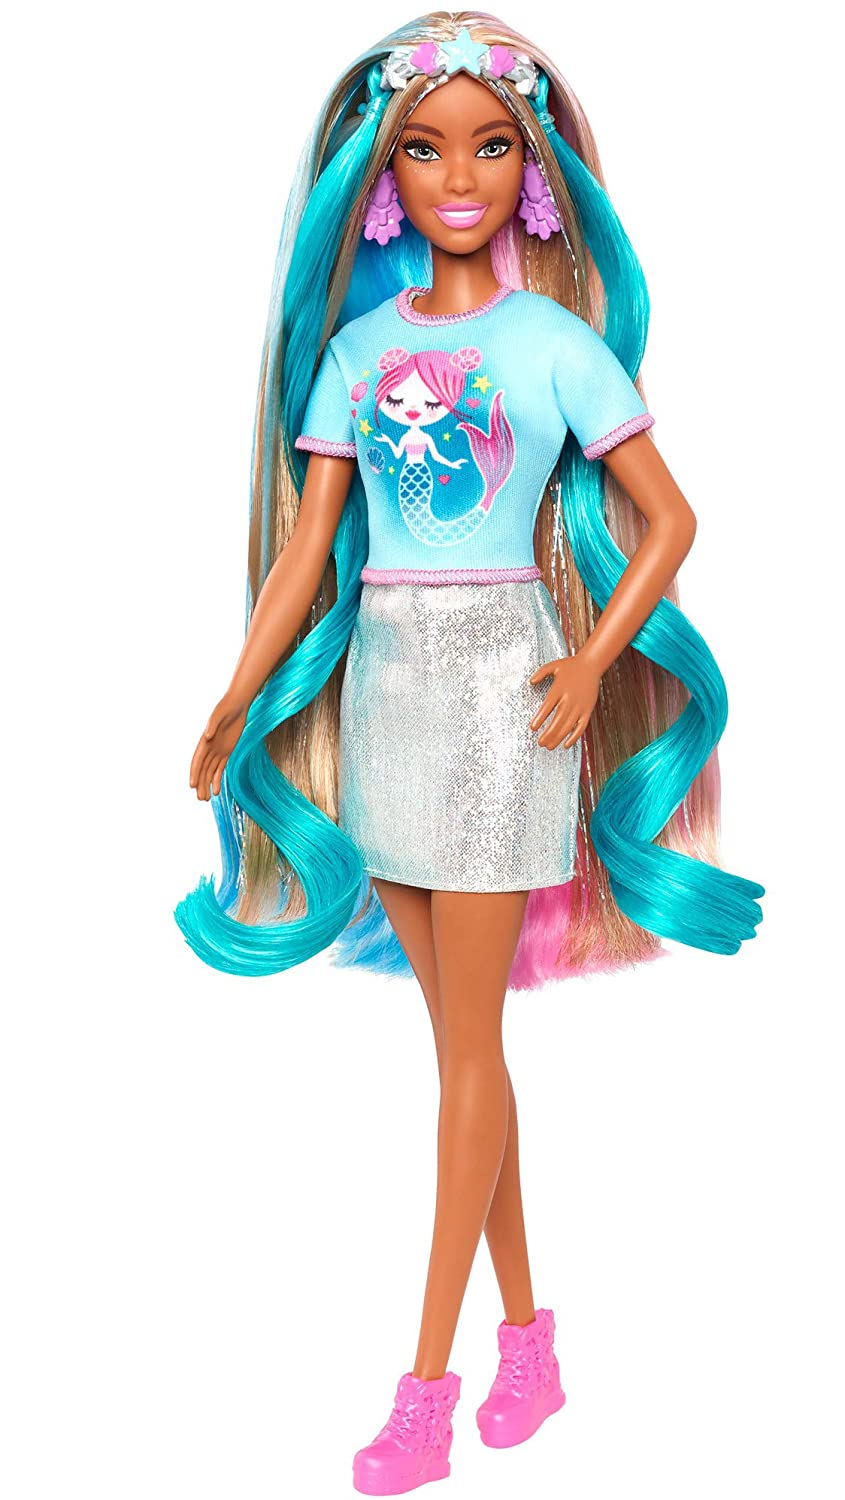 moeilijk Fitness Miniatuur AA Barbie Fantasy Hair doll photos - YouLoveIt.com